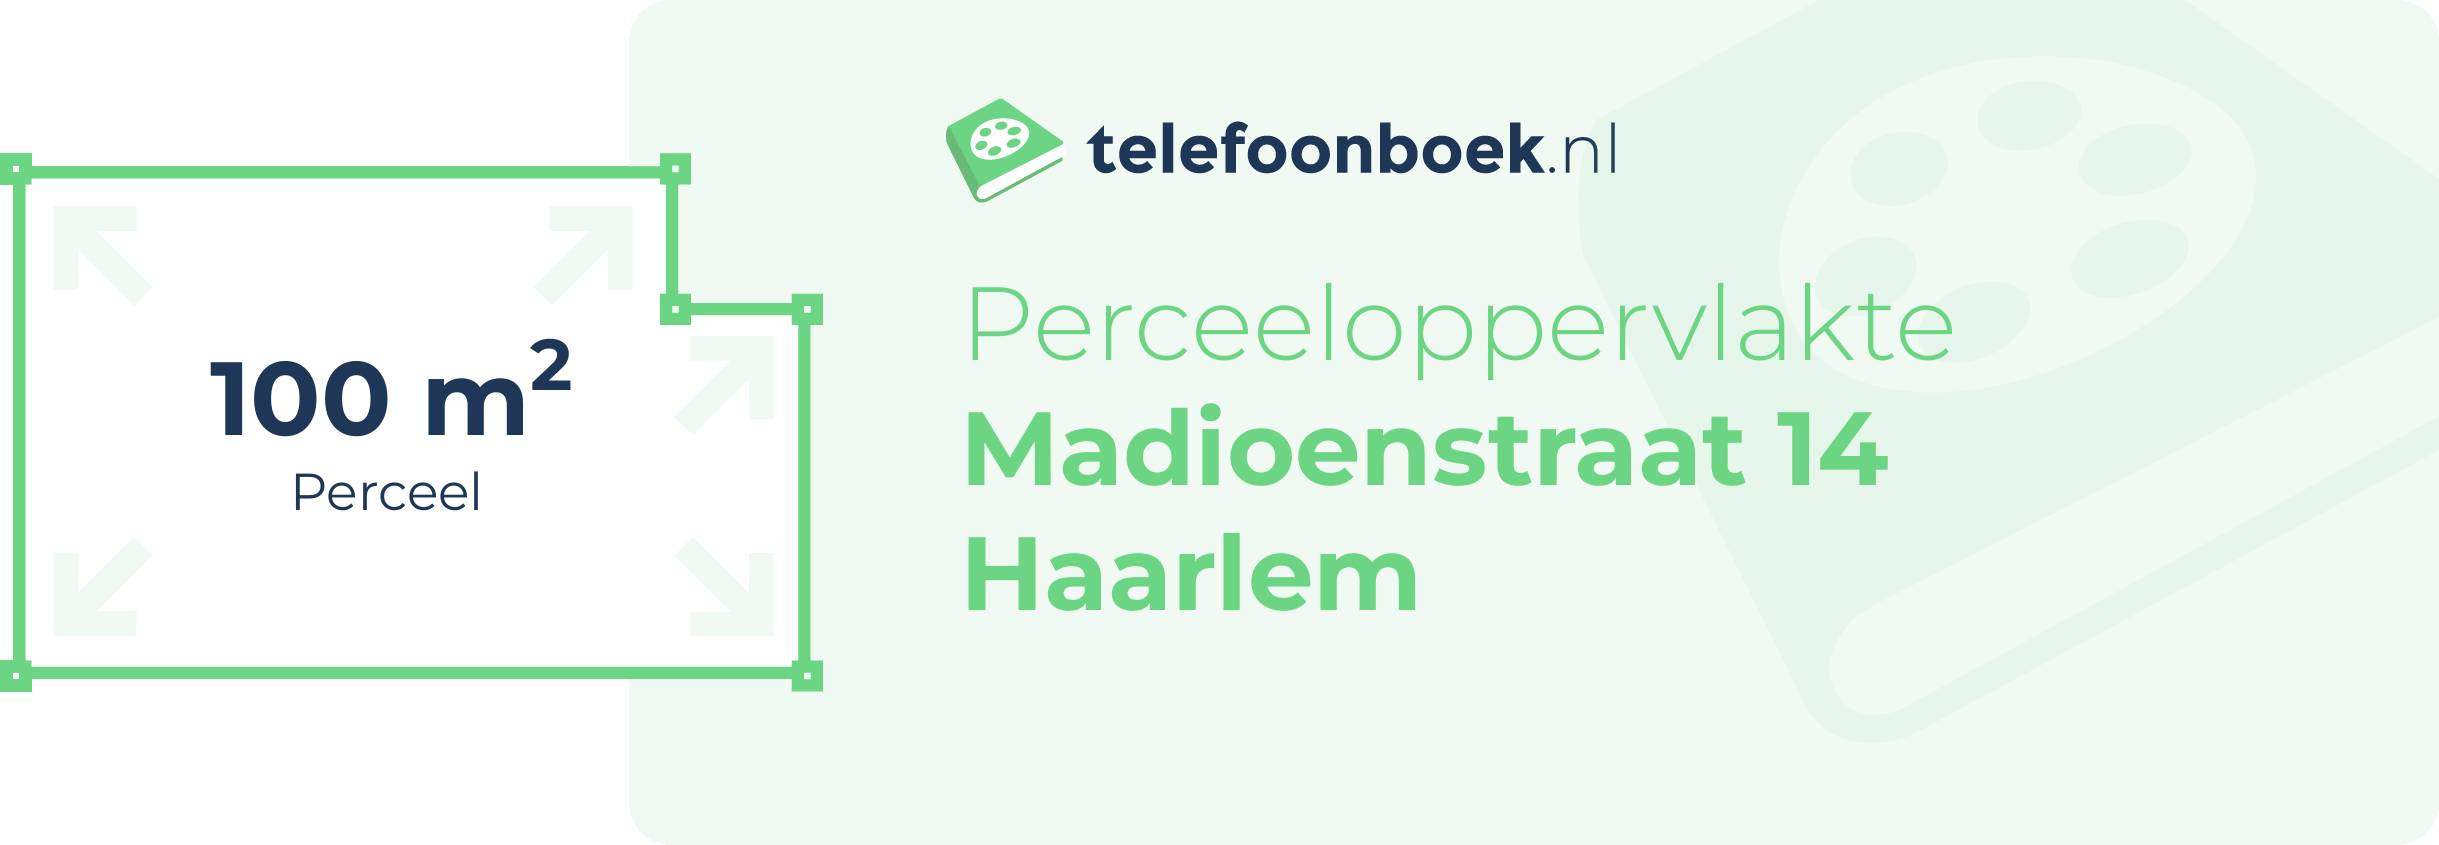 Perceeloppervlakte Madioenstraat 14 Haarlem